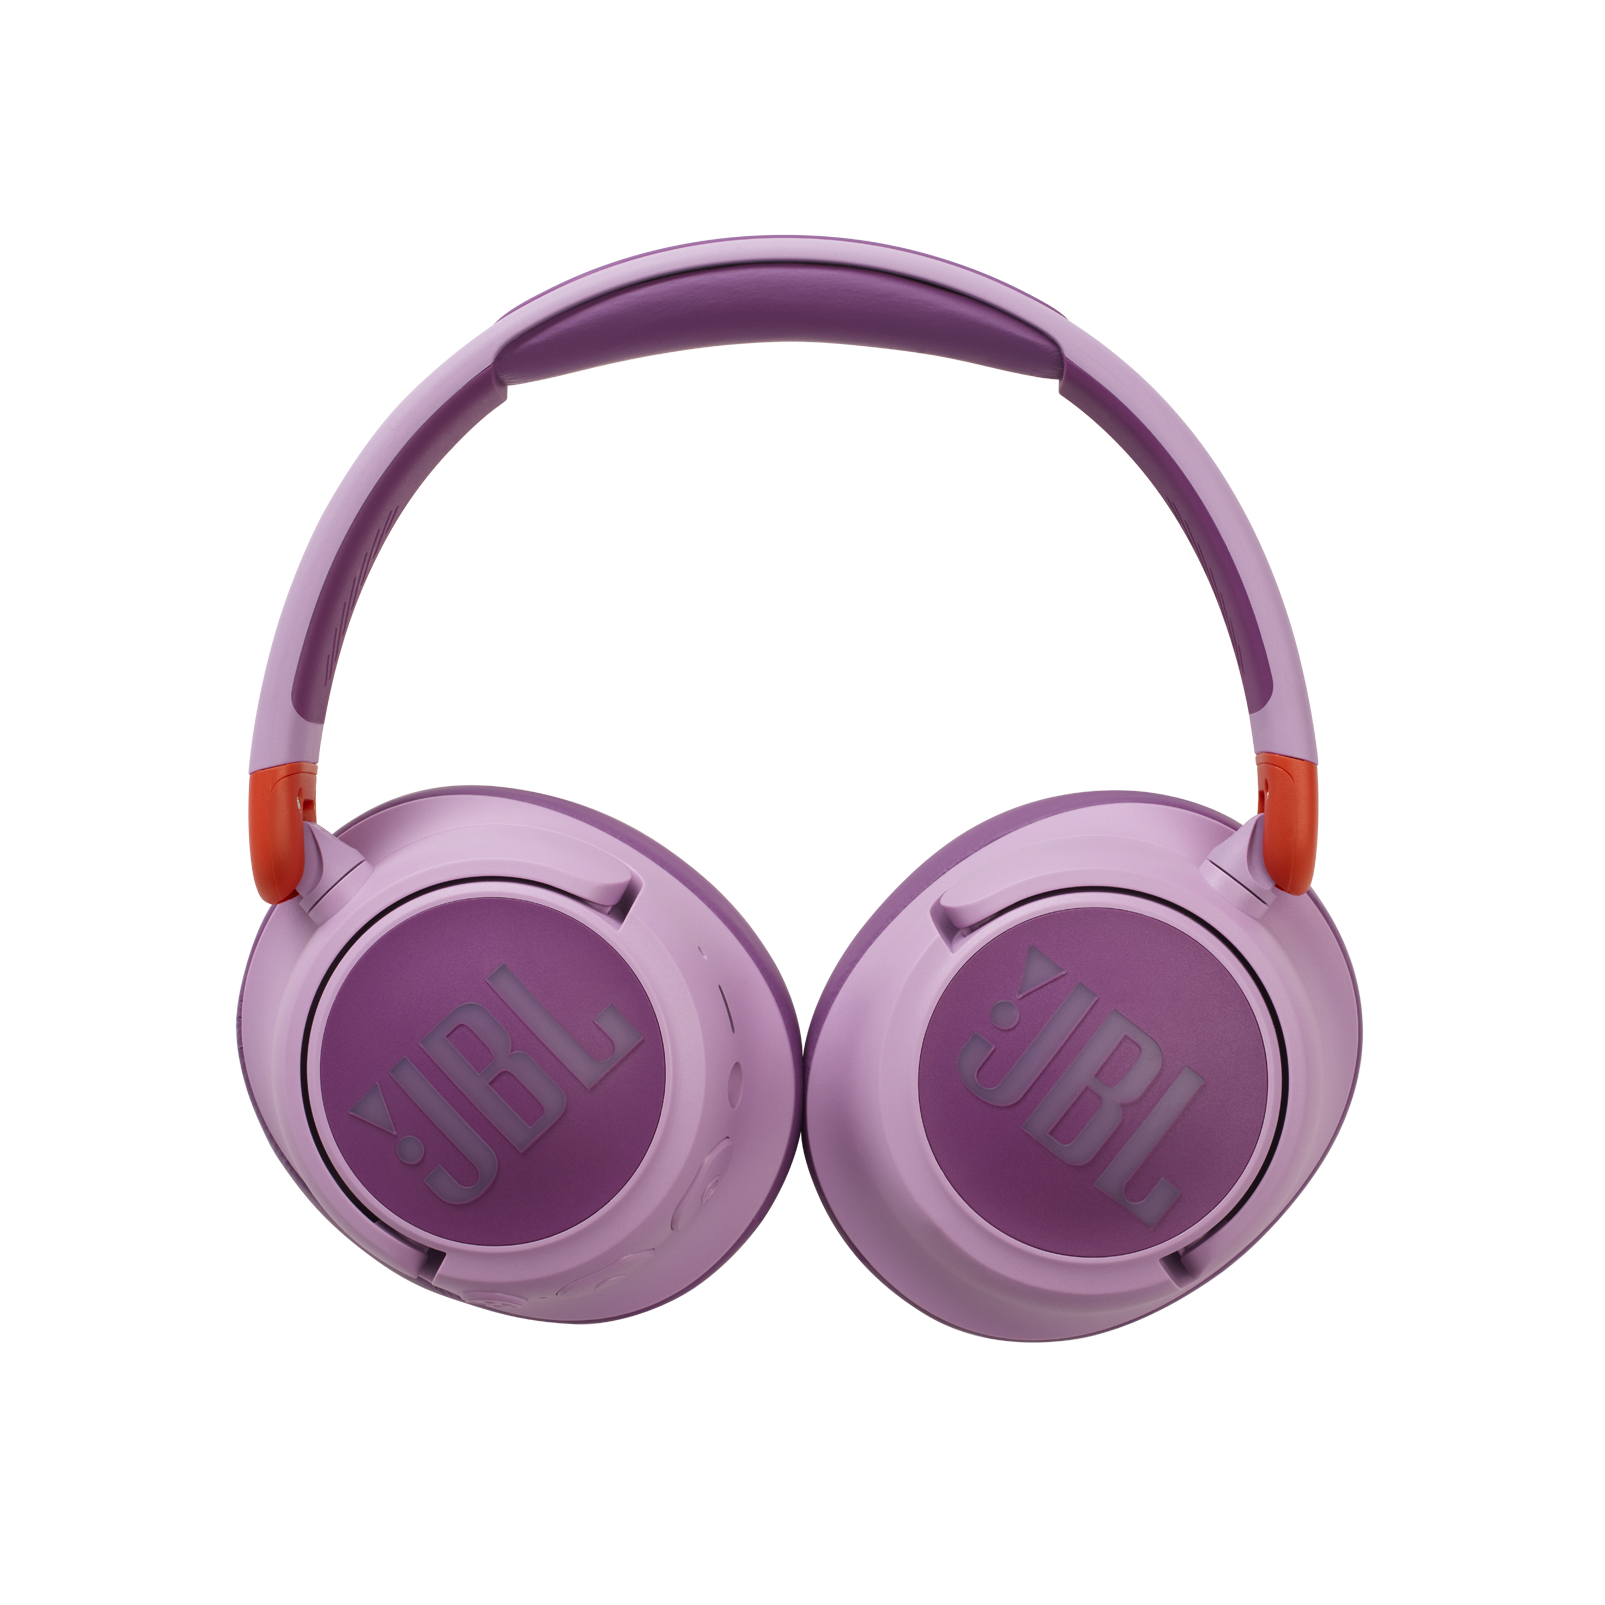 JBL JR 460NC - Pink - Wireless over-ear Noise Cancelling kids headphones - Detailshot 2